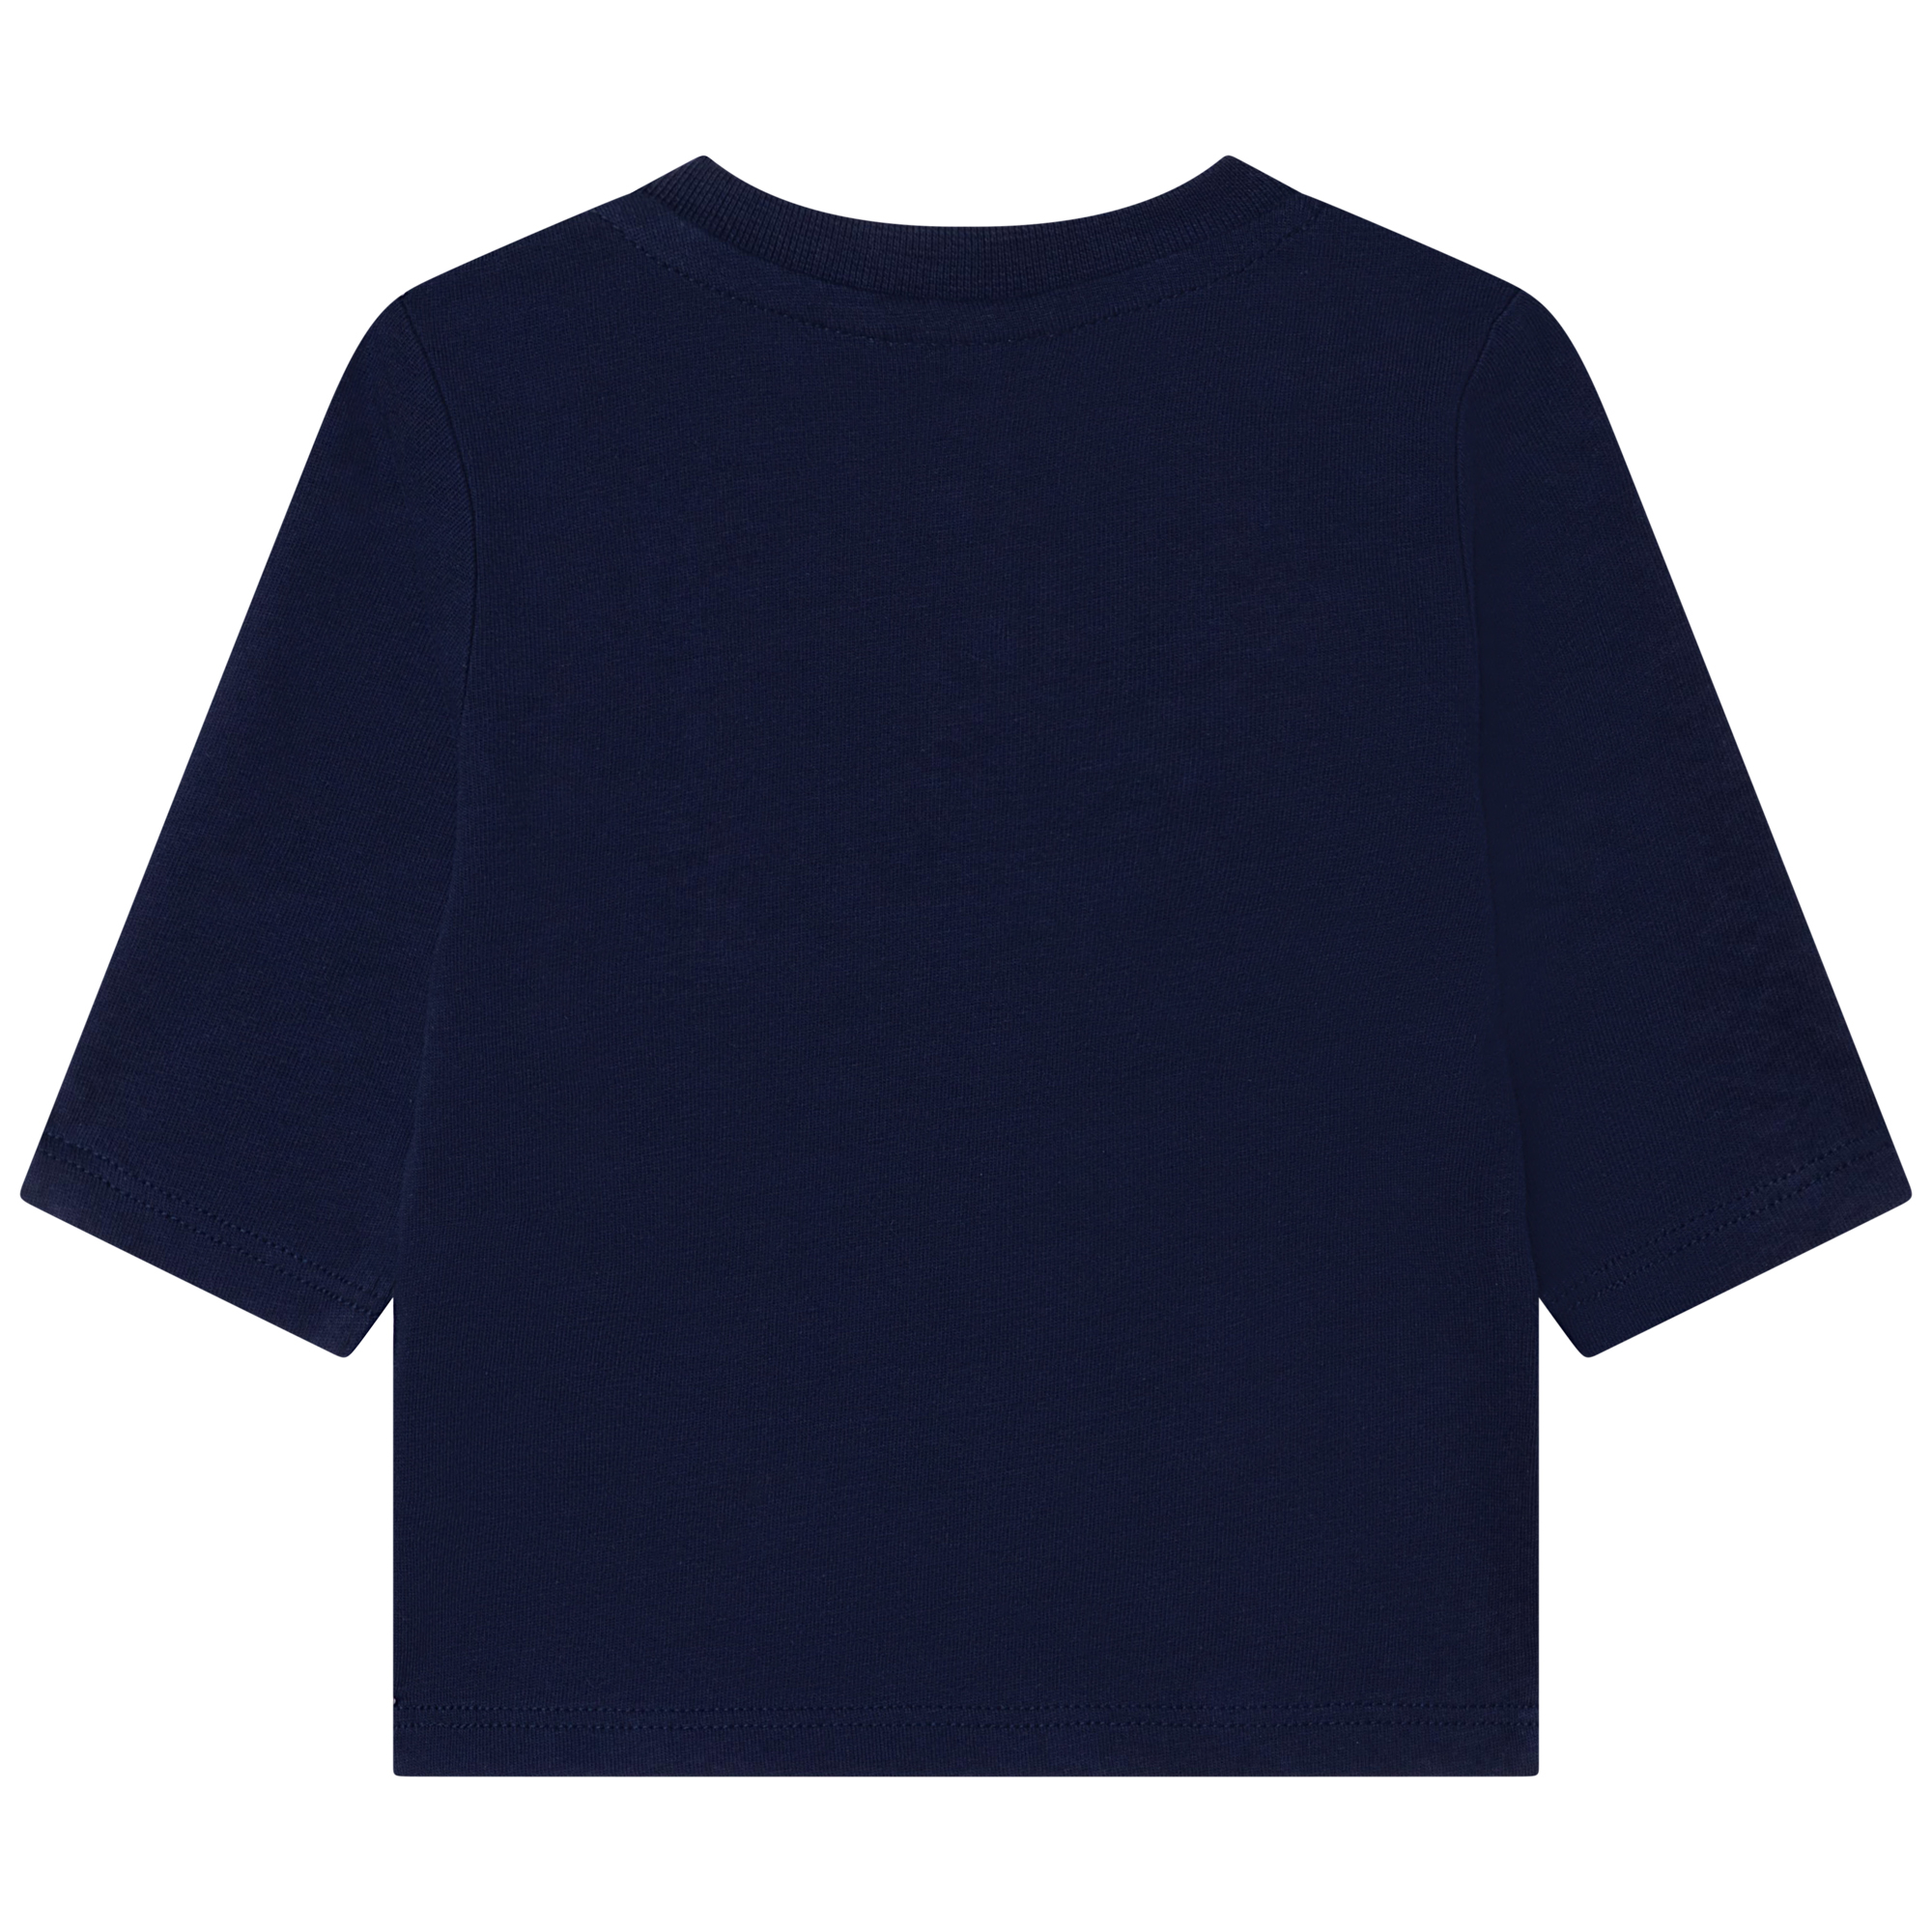 Long-sleeved cotton T-shirt BOSS for BOY